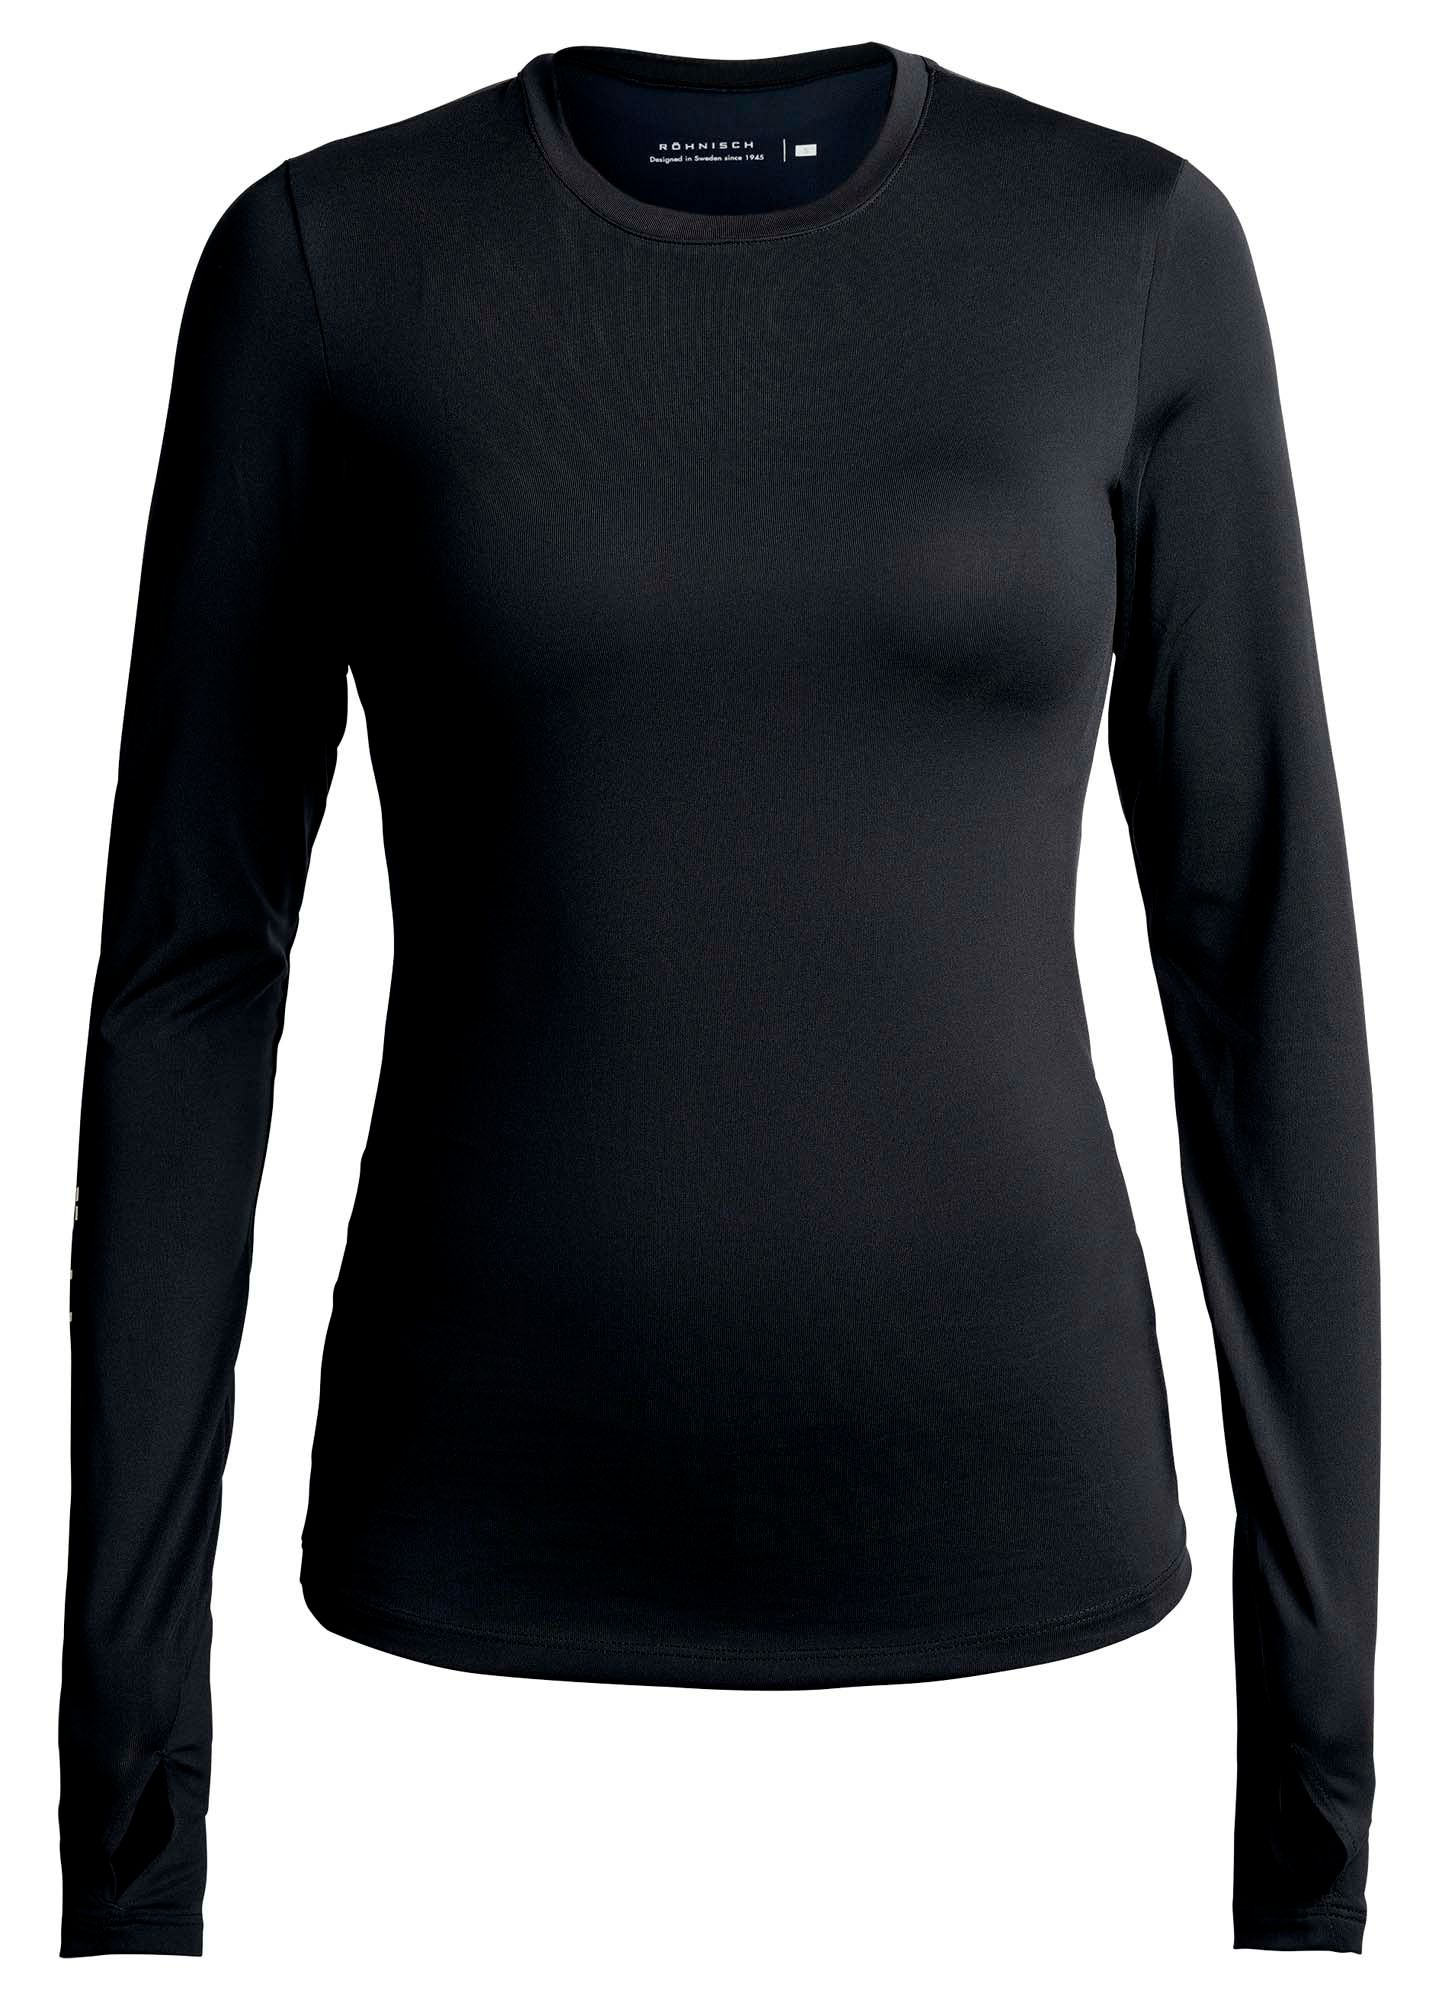 Röhnisch Women's Team Logo Long Sleeve Black